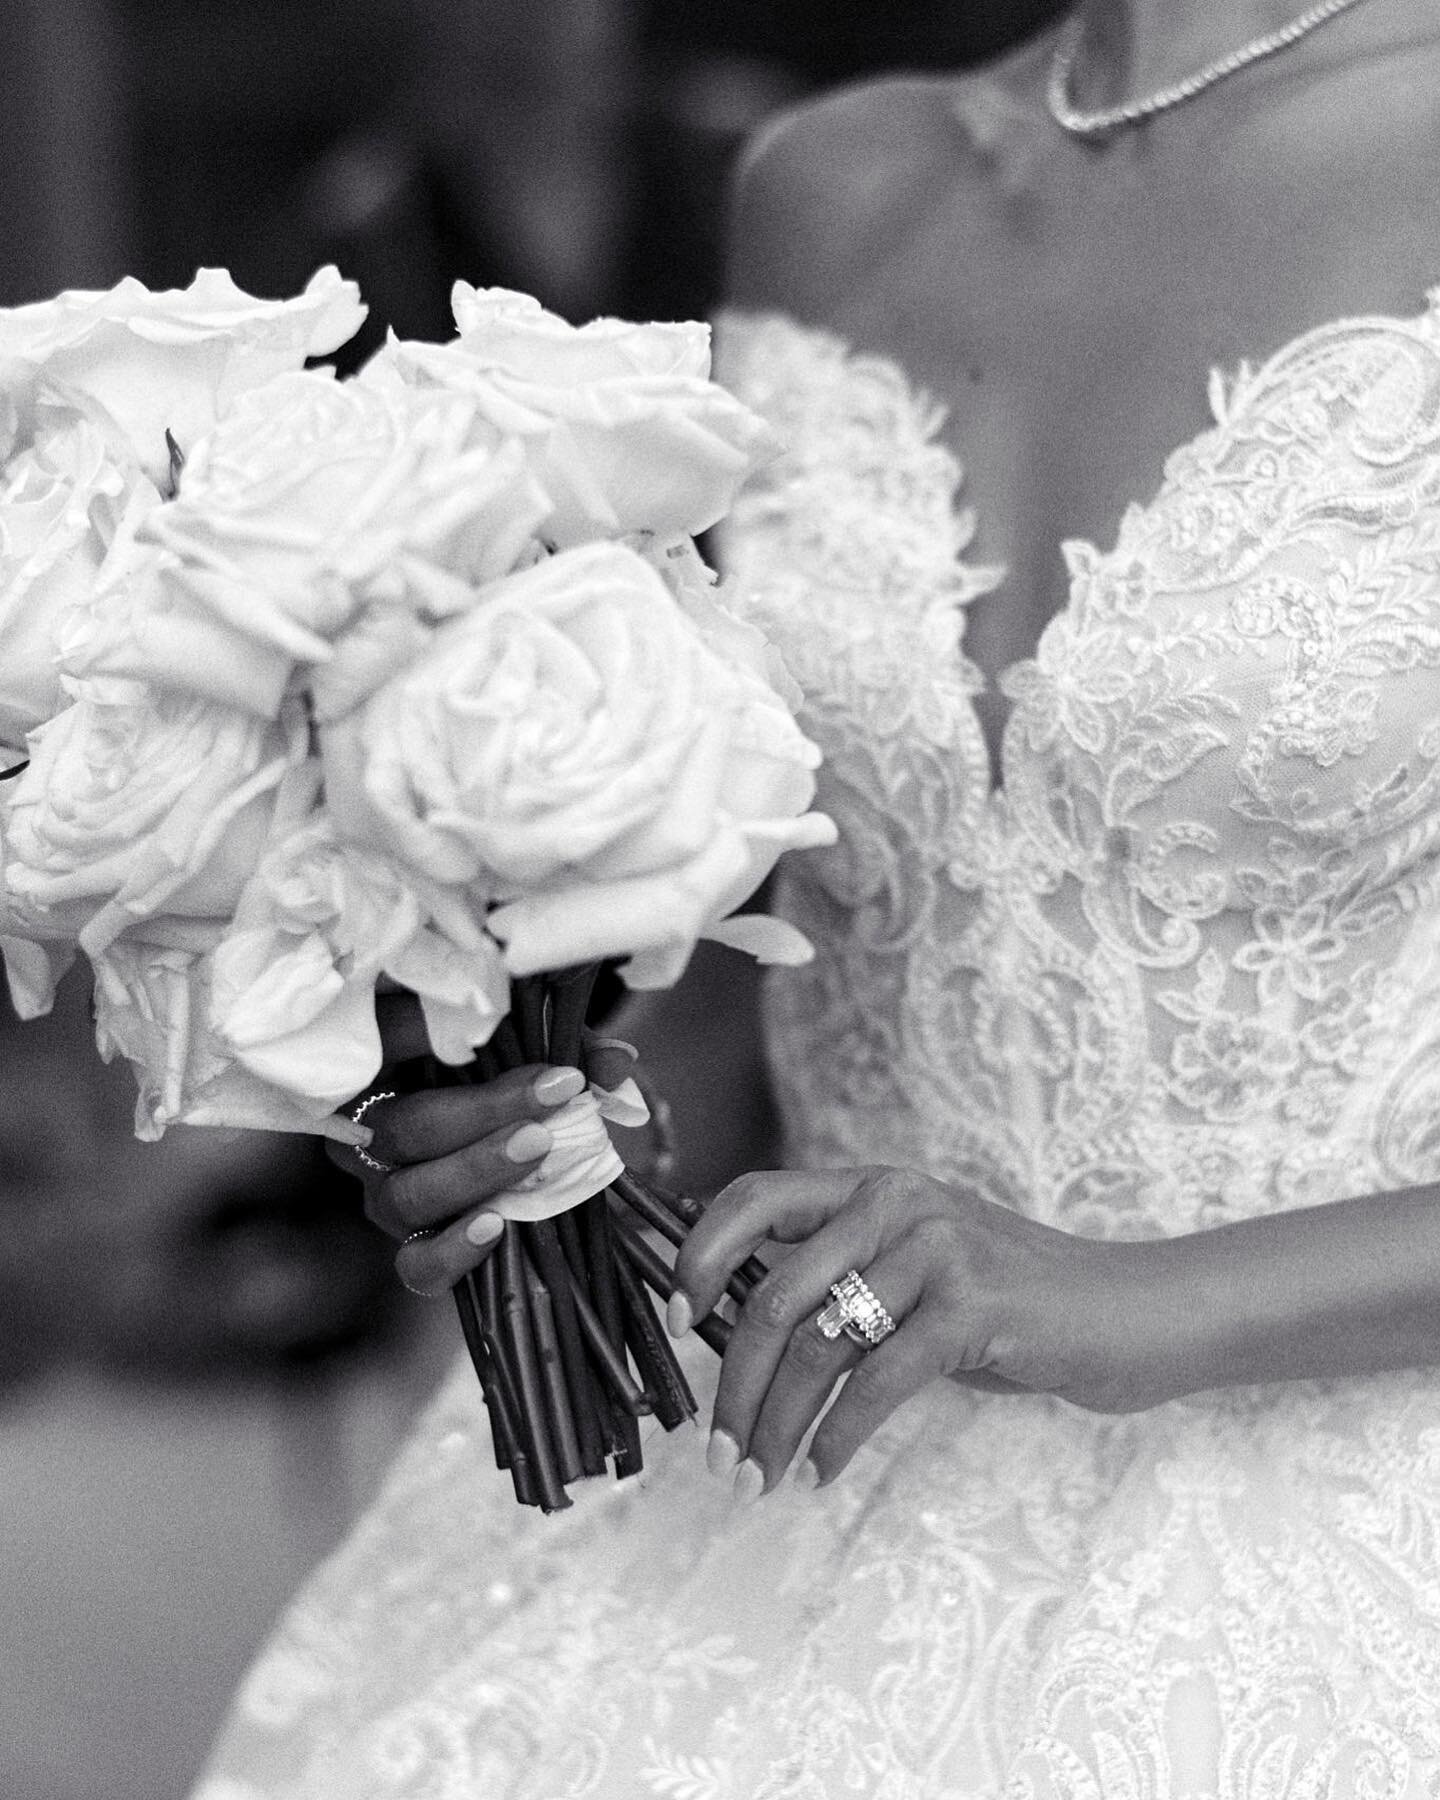 A moment of bridal elegance captured by @linasdambrauskas ✨